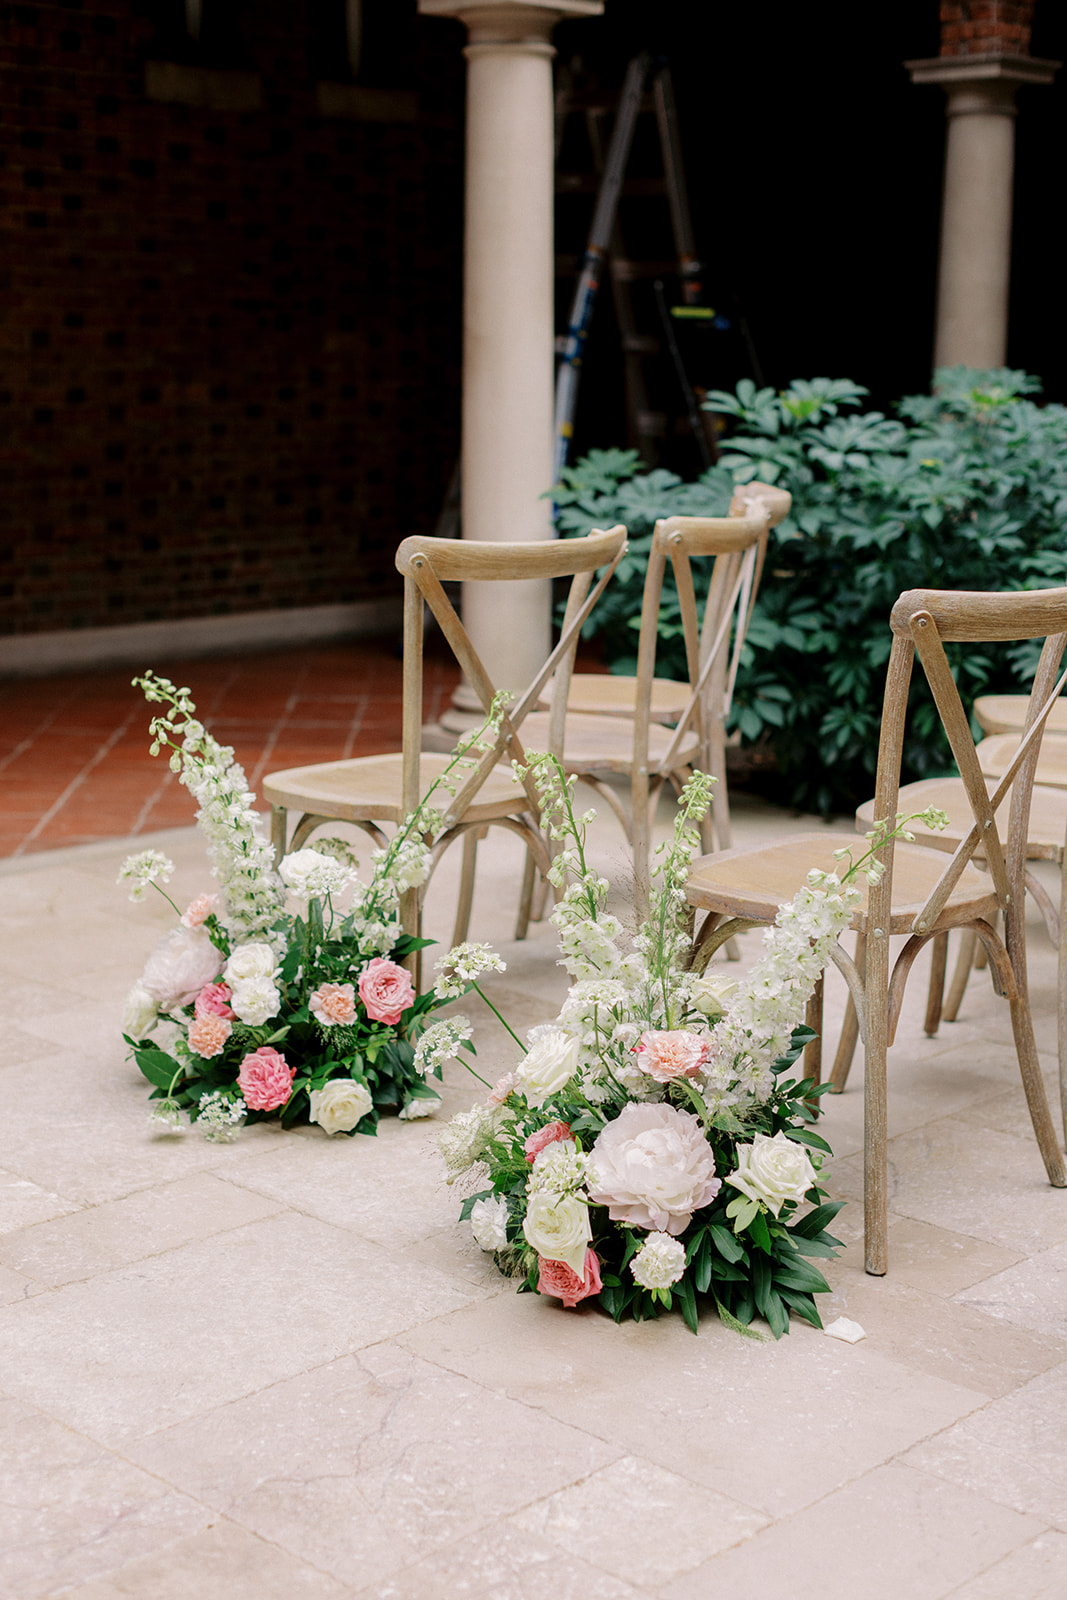 ceremony flower arrangements that sit on the ground